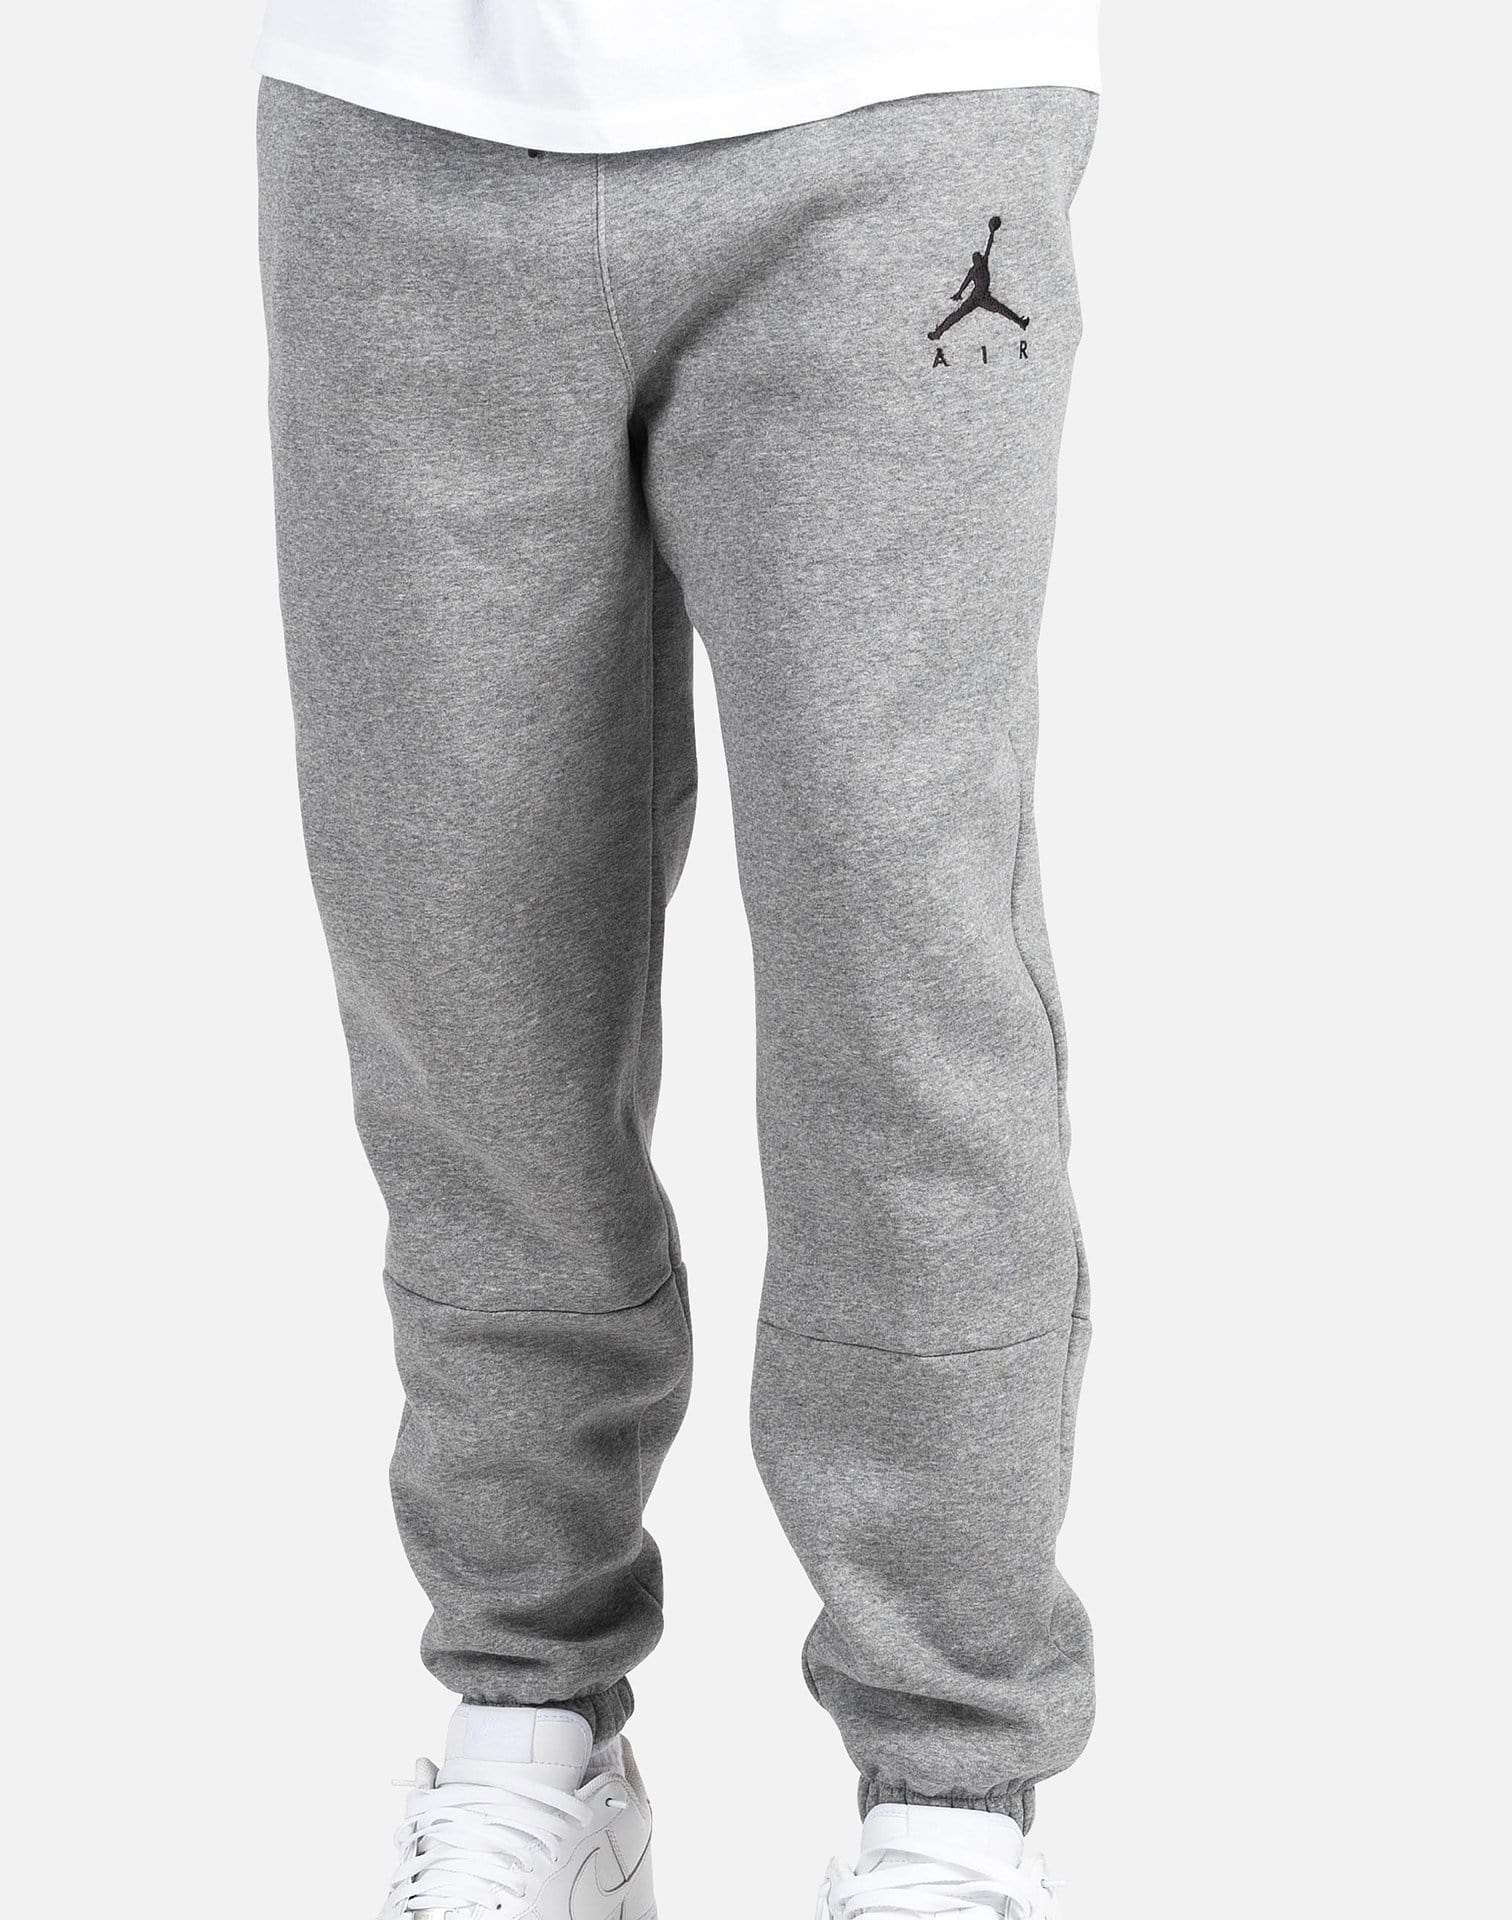 Jordan Jumpman Fleece Pants